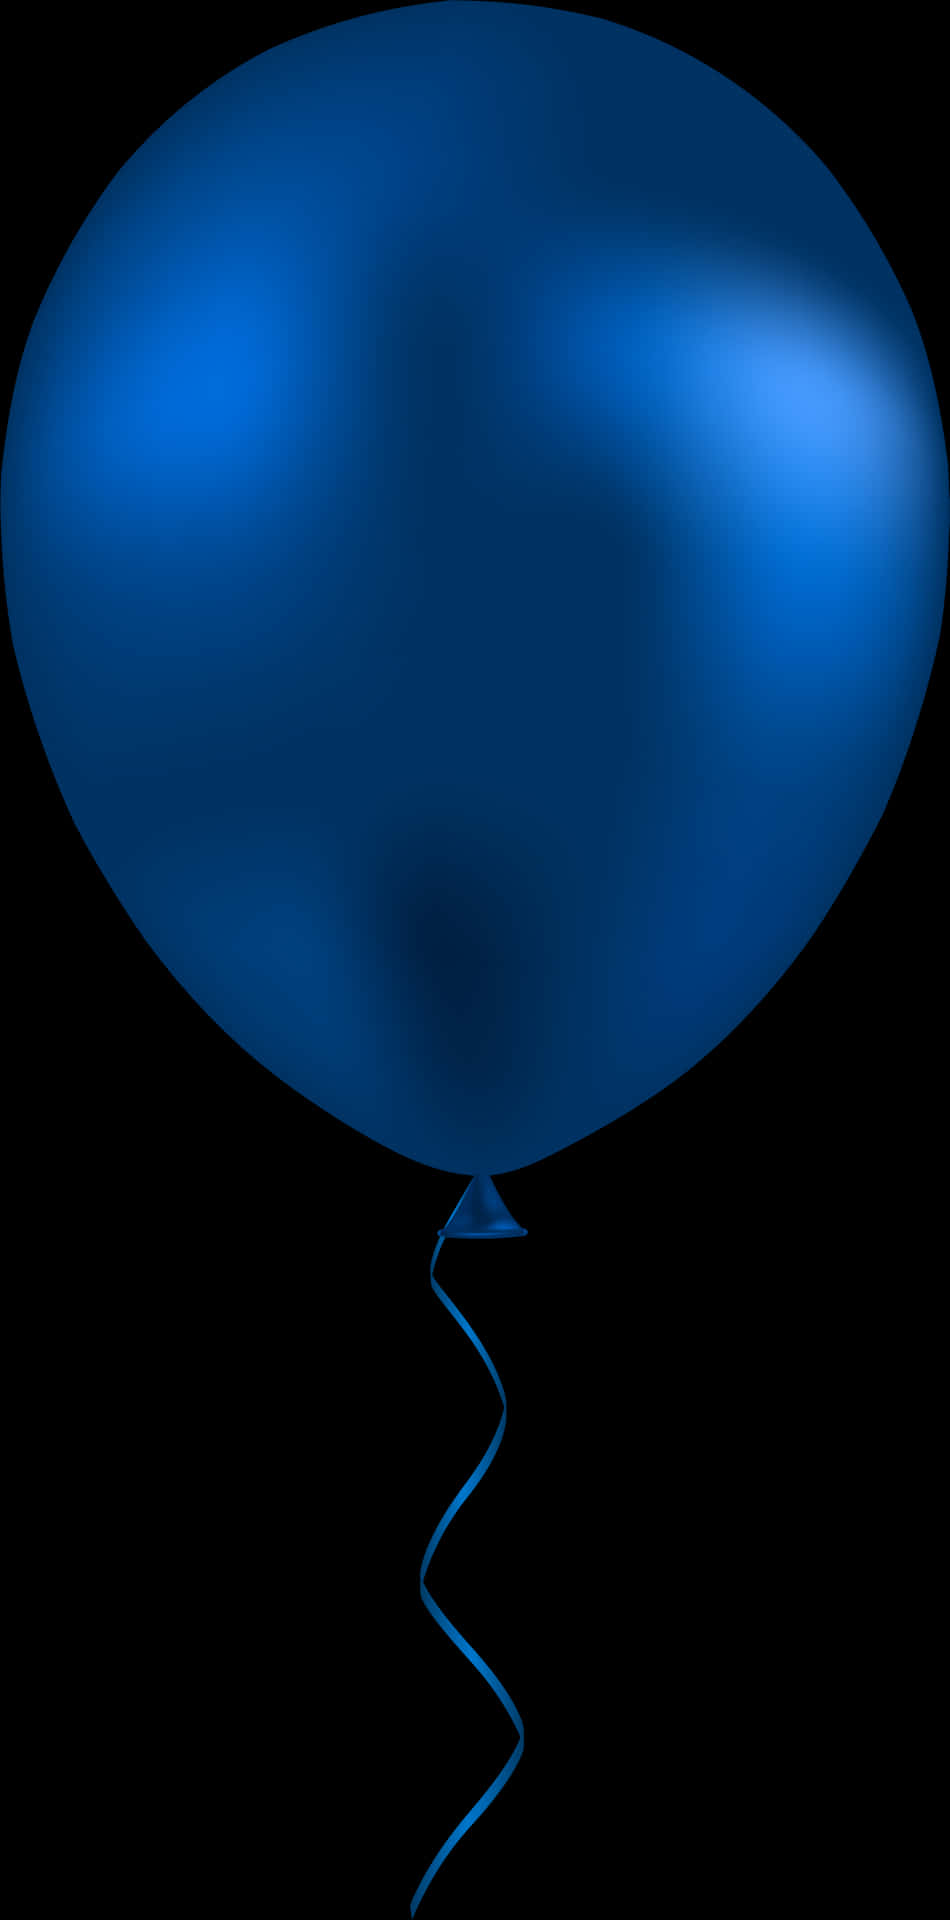 Blue Balloonon Black Background PNG image